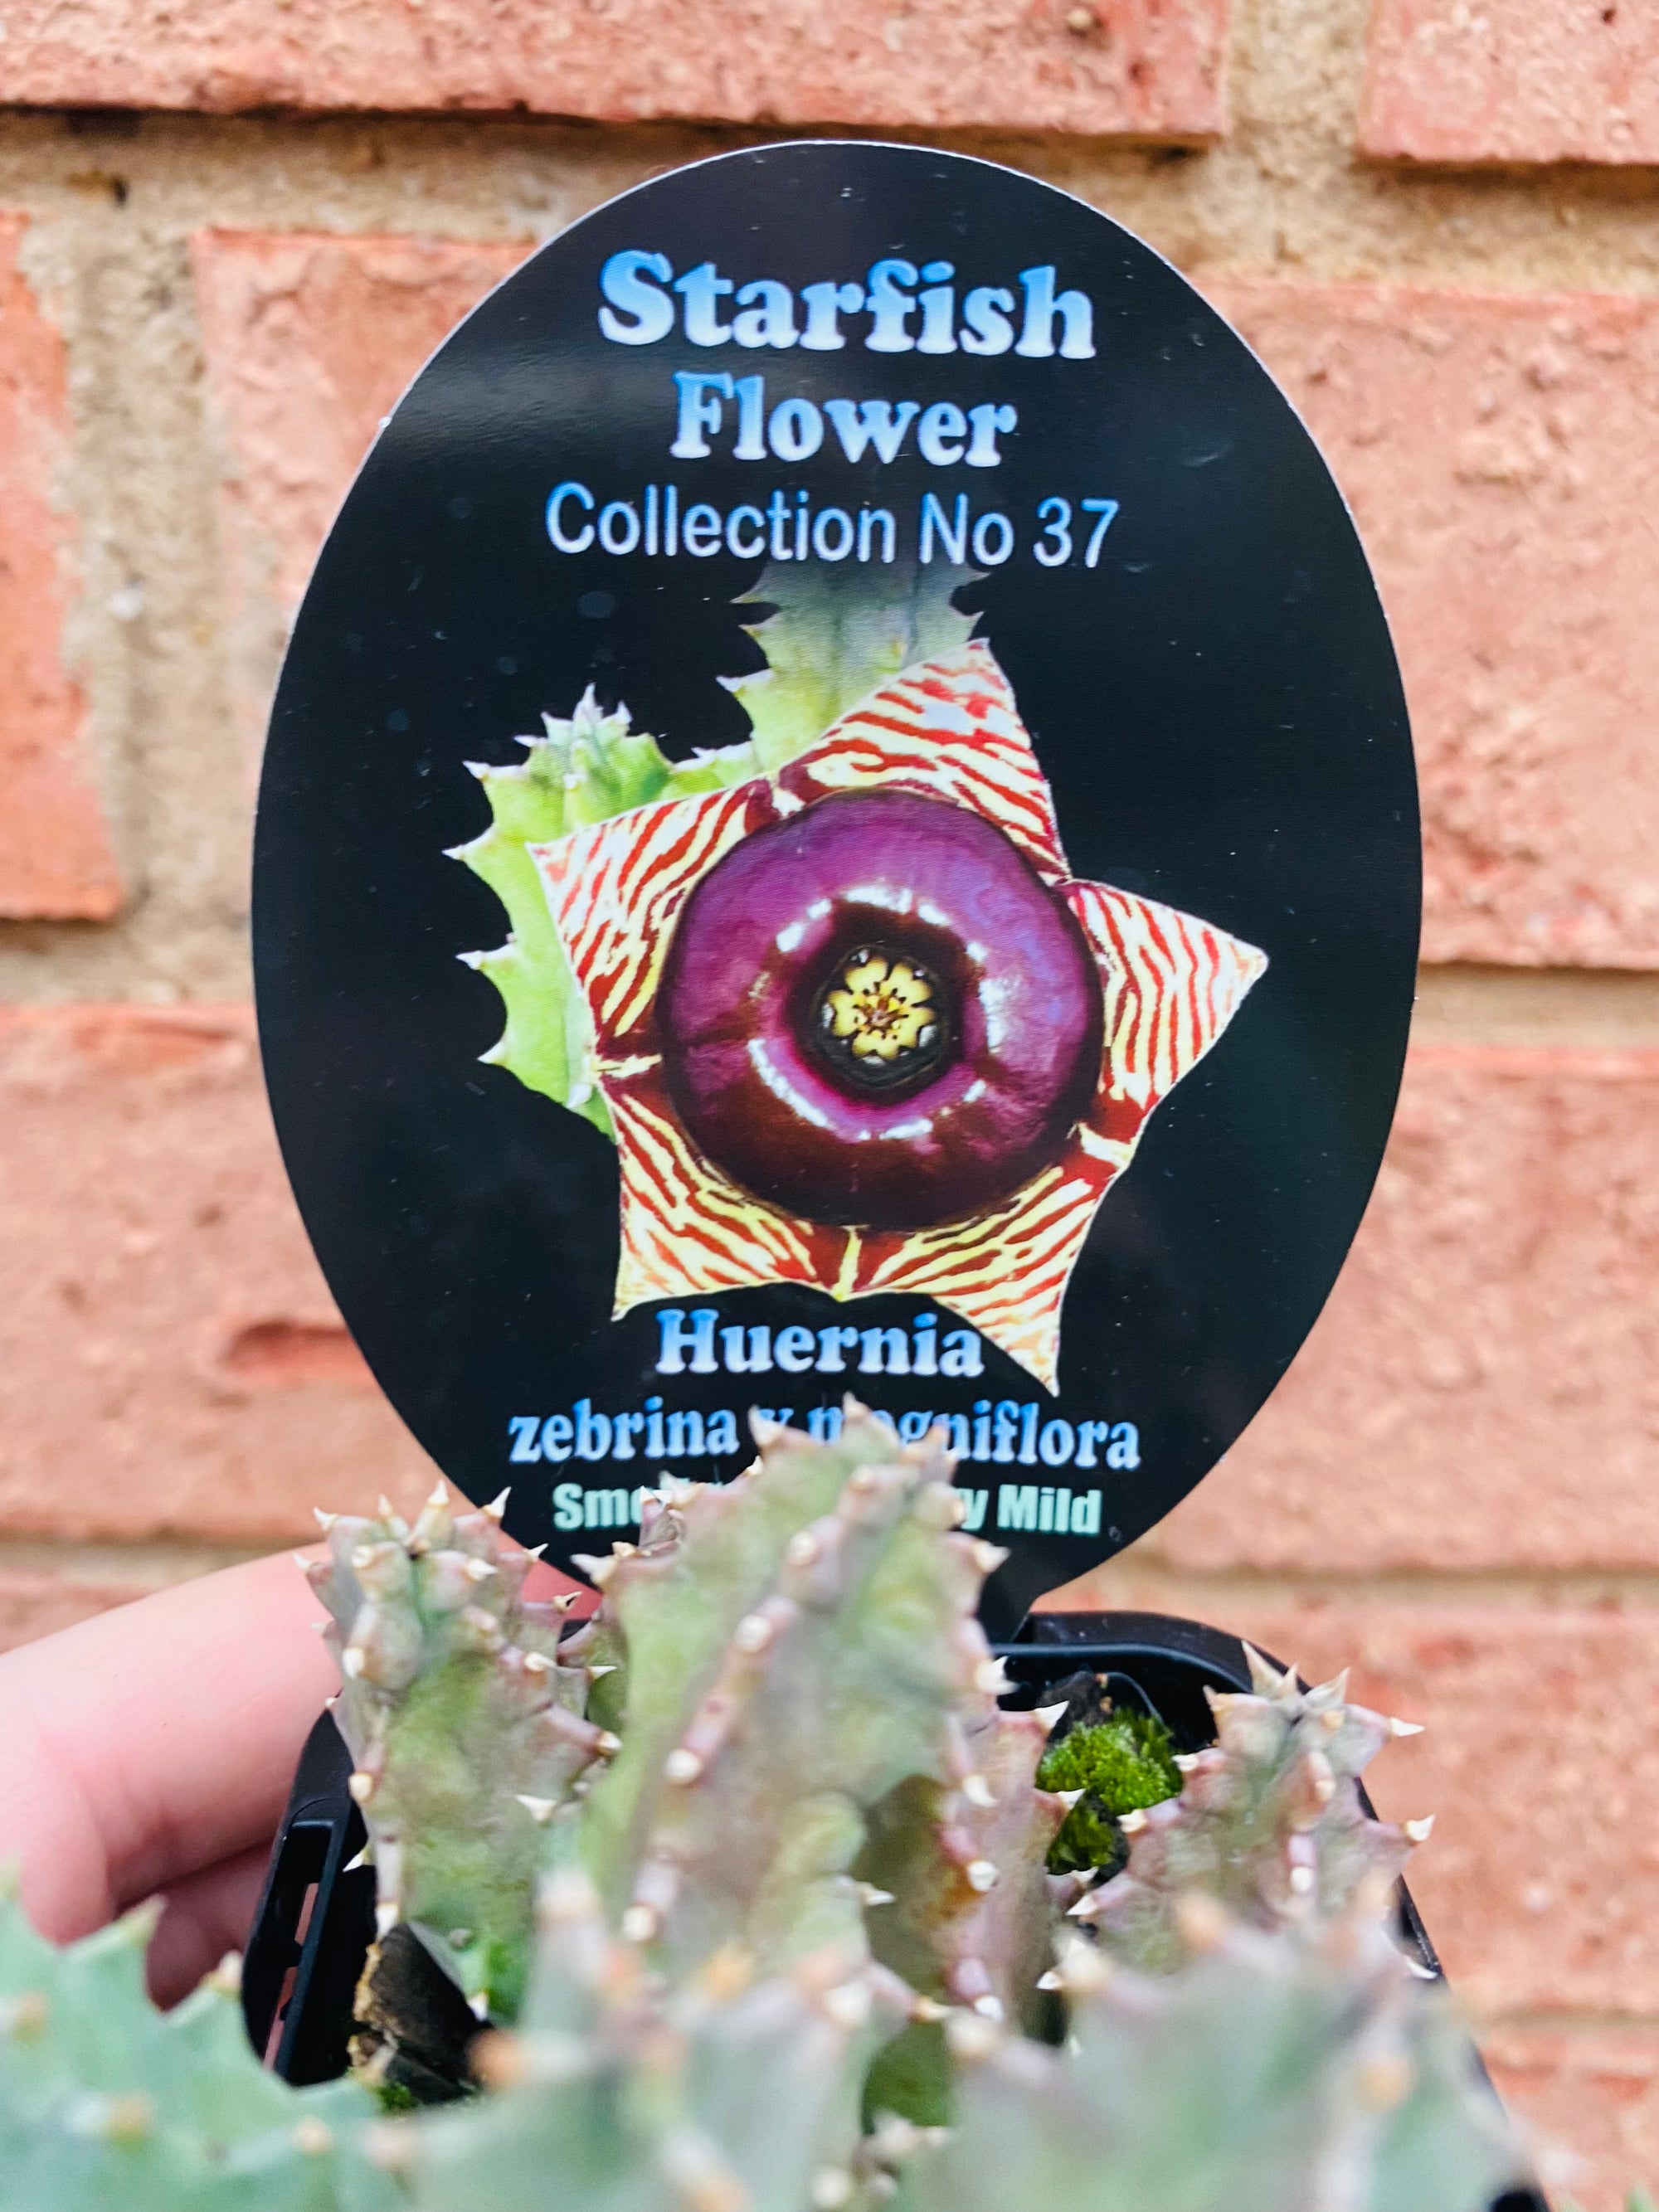 Huernia Zebrina v magniflora - Starfish Flower Collection No. 37